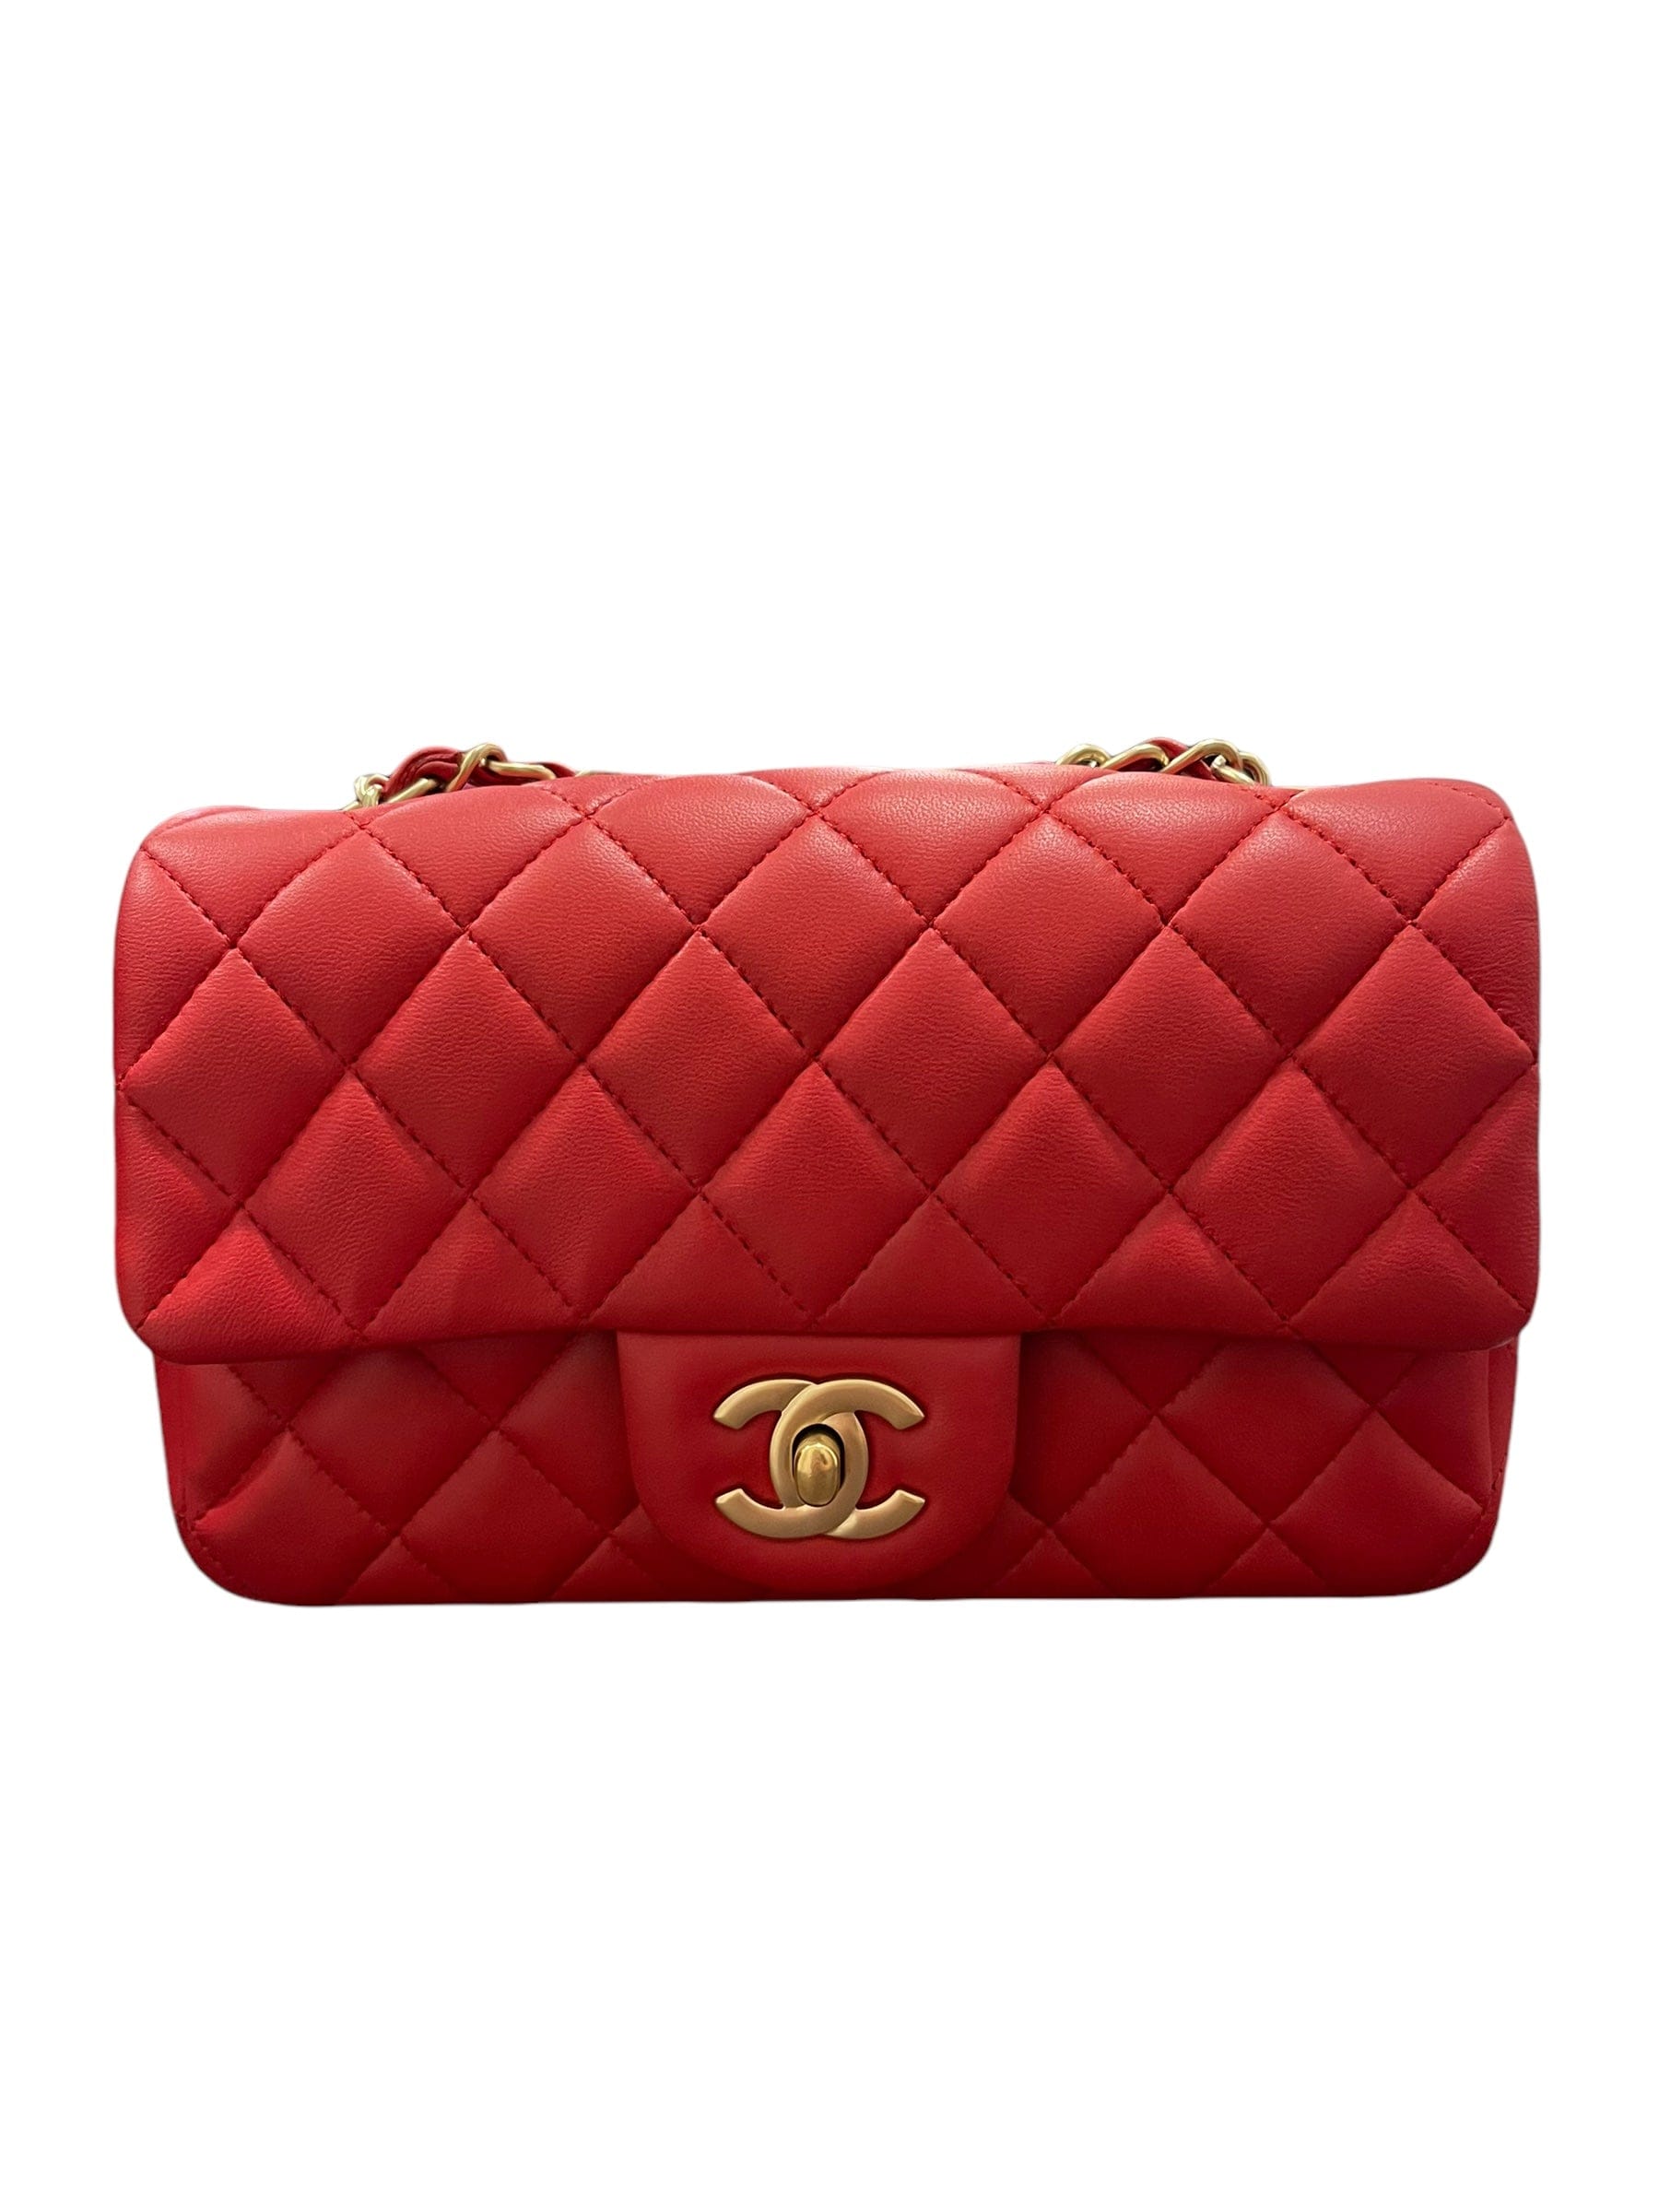 Chanel Chanel Mini Rectangle Red Lambskin Matte GHW #17